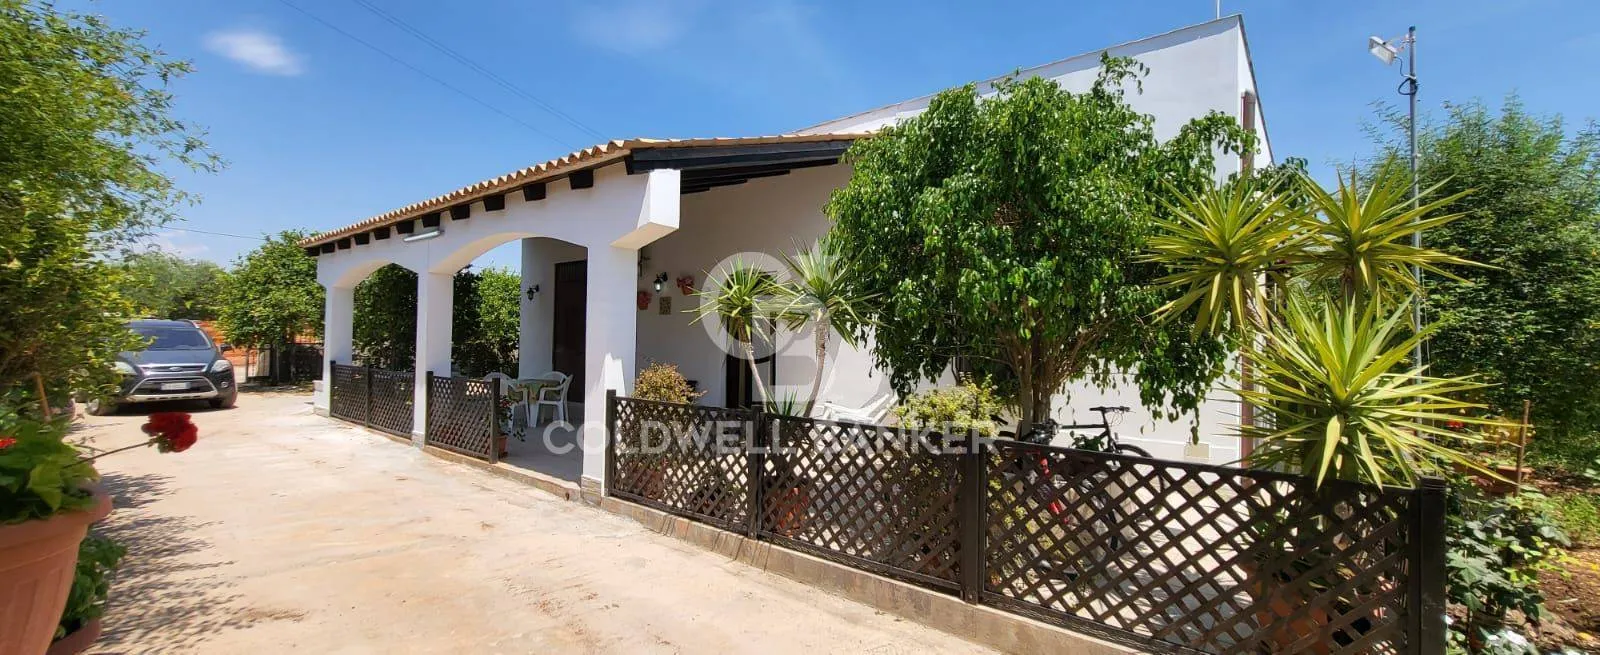 Immagine per Villa in vendita a Noto Contrada vendicari